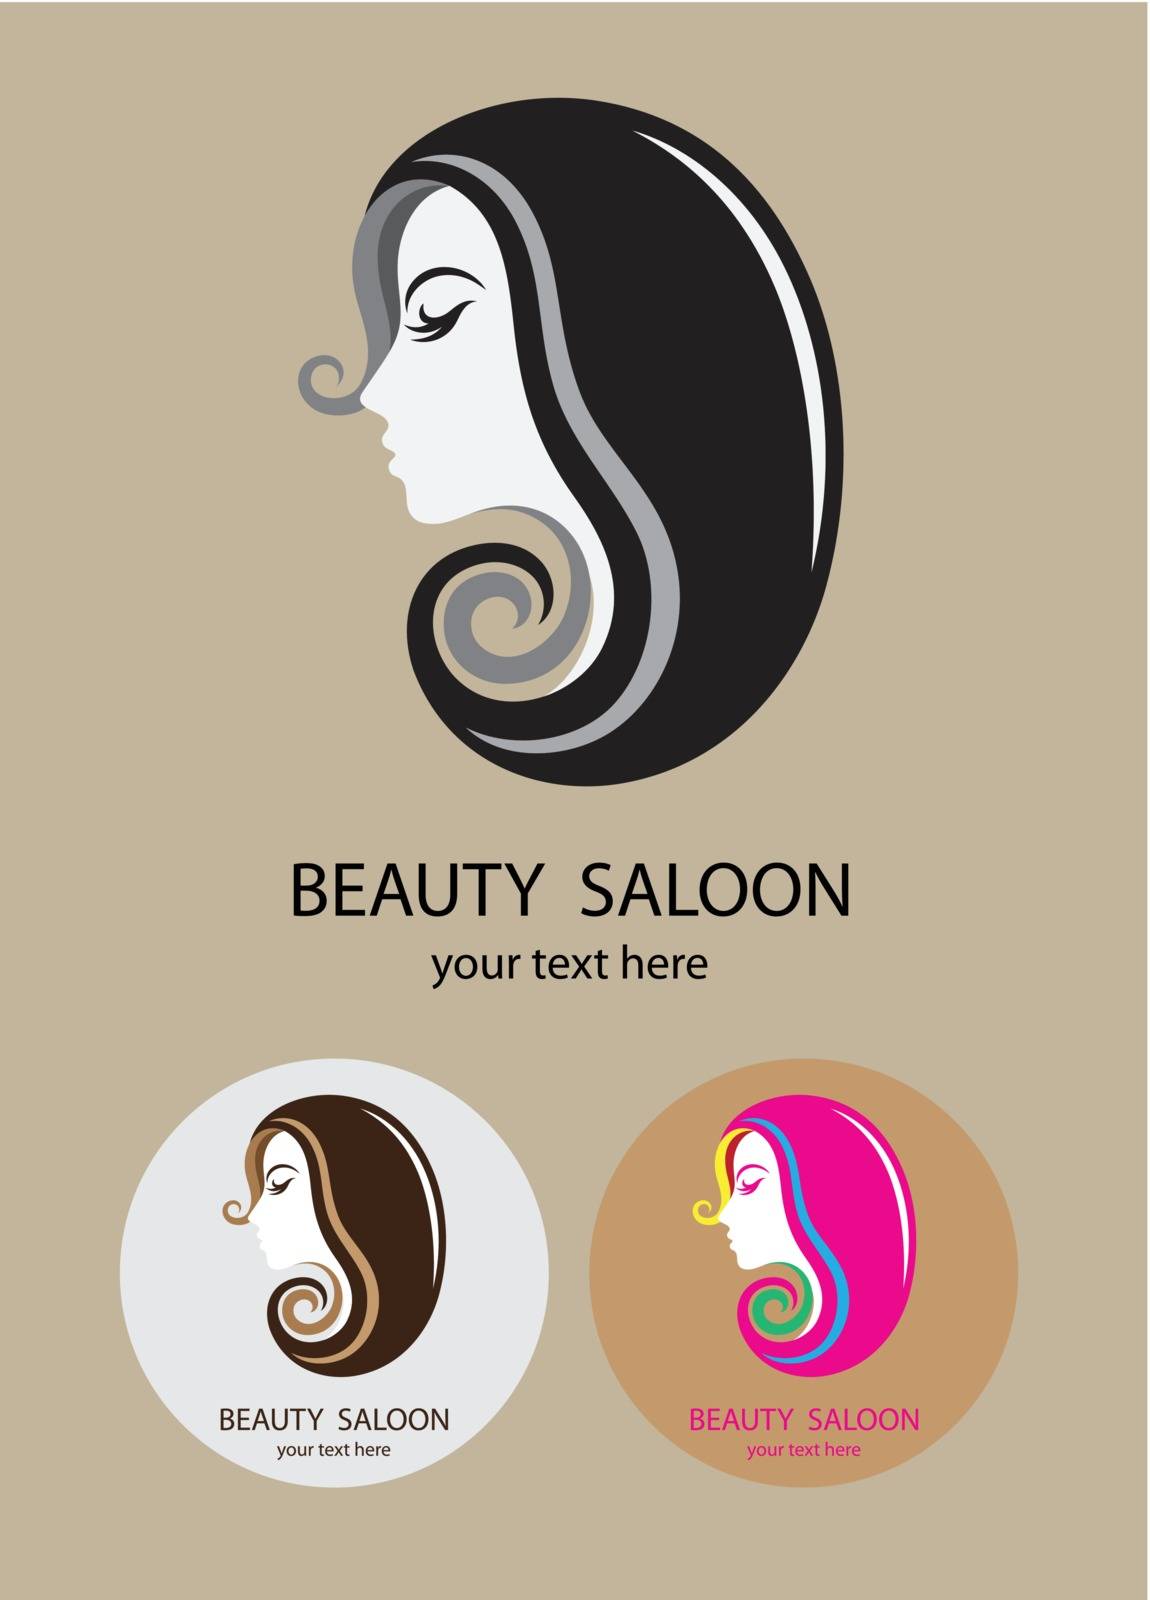 Beauty saloon,art vector logo design